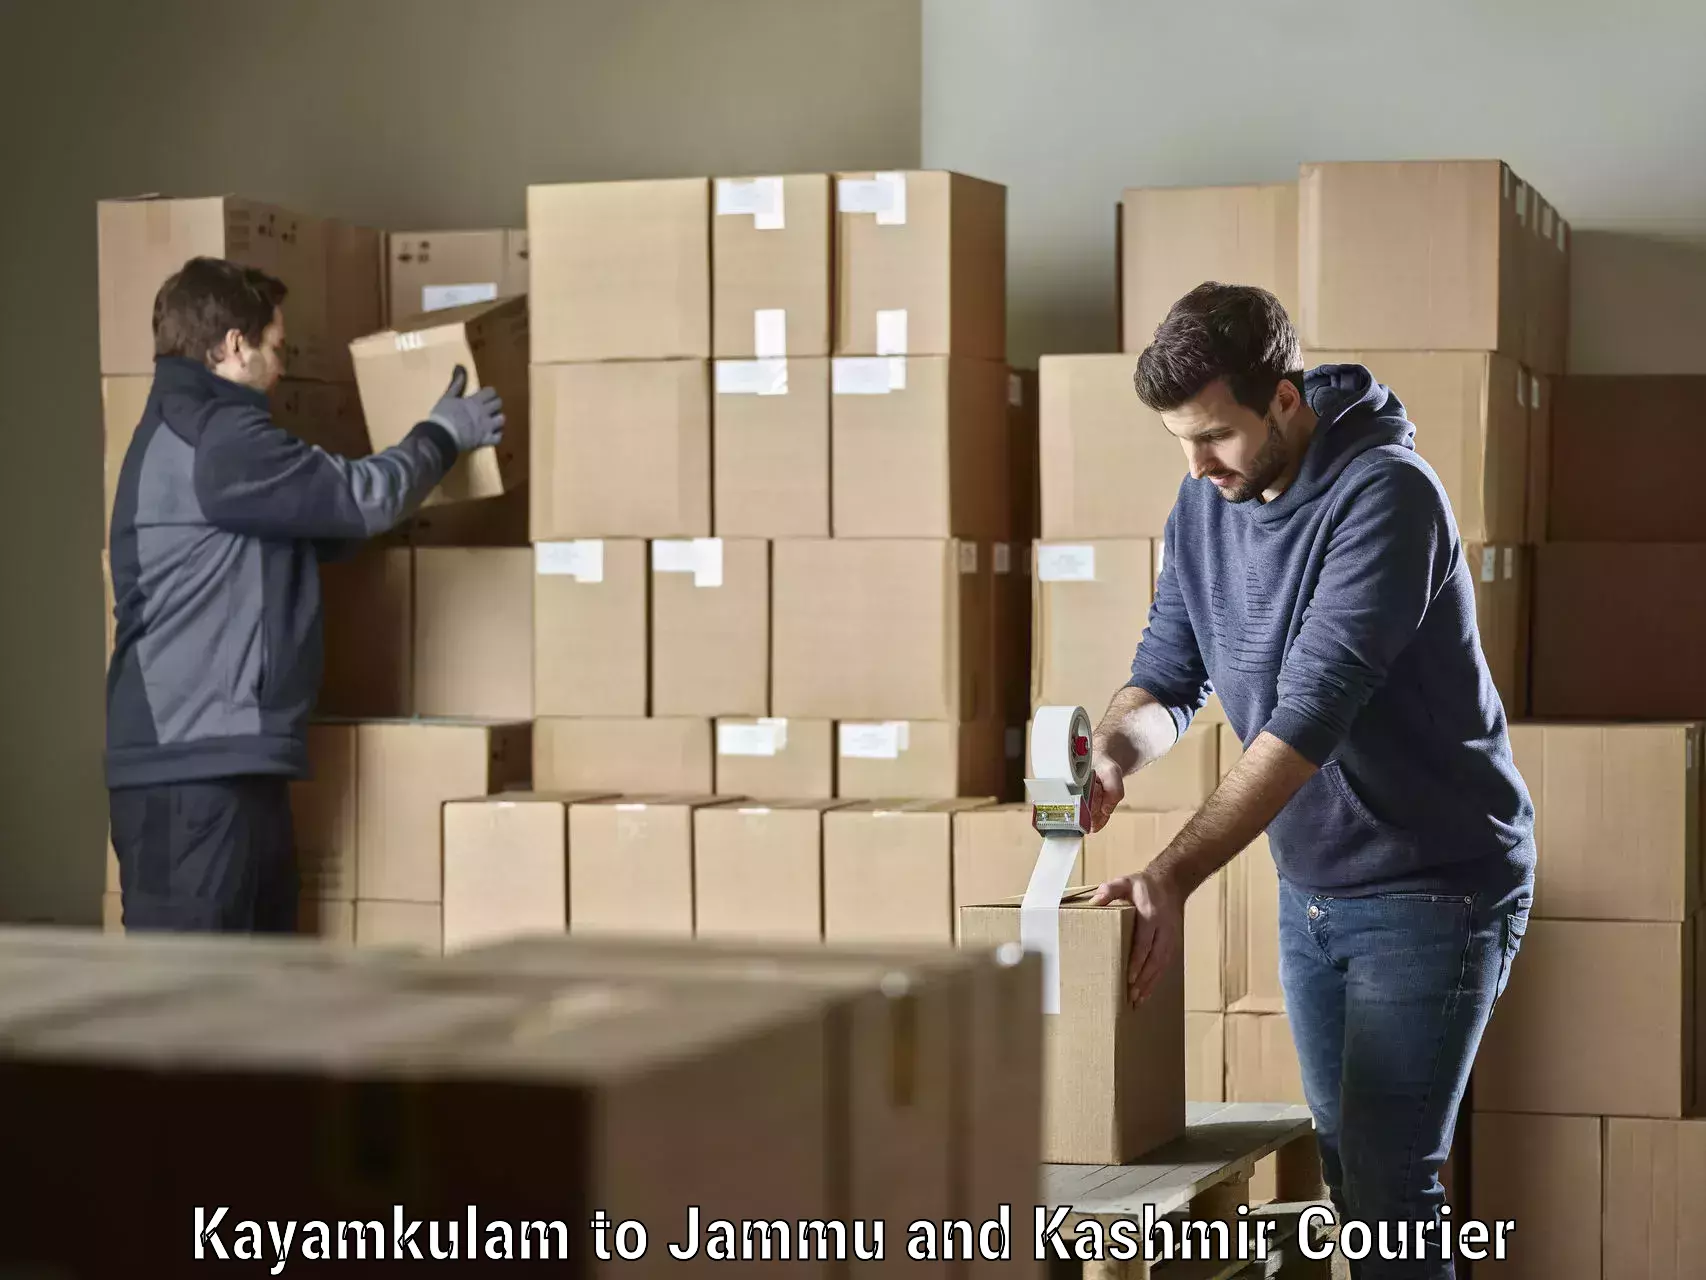 Express delivery network Kayamkulam to Jammu and Kashmir